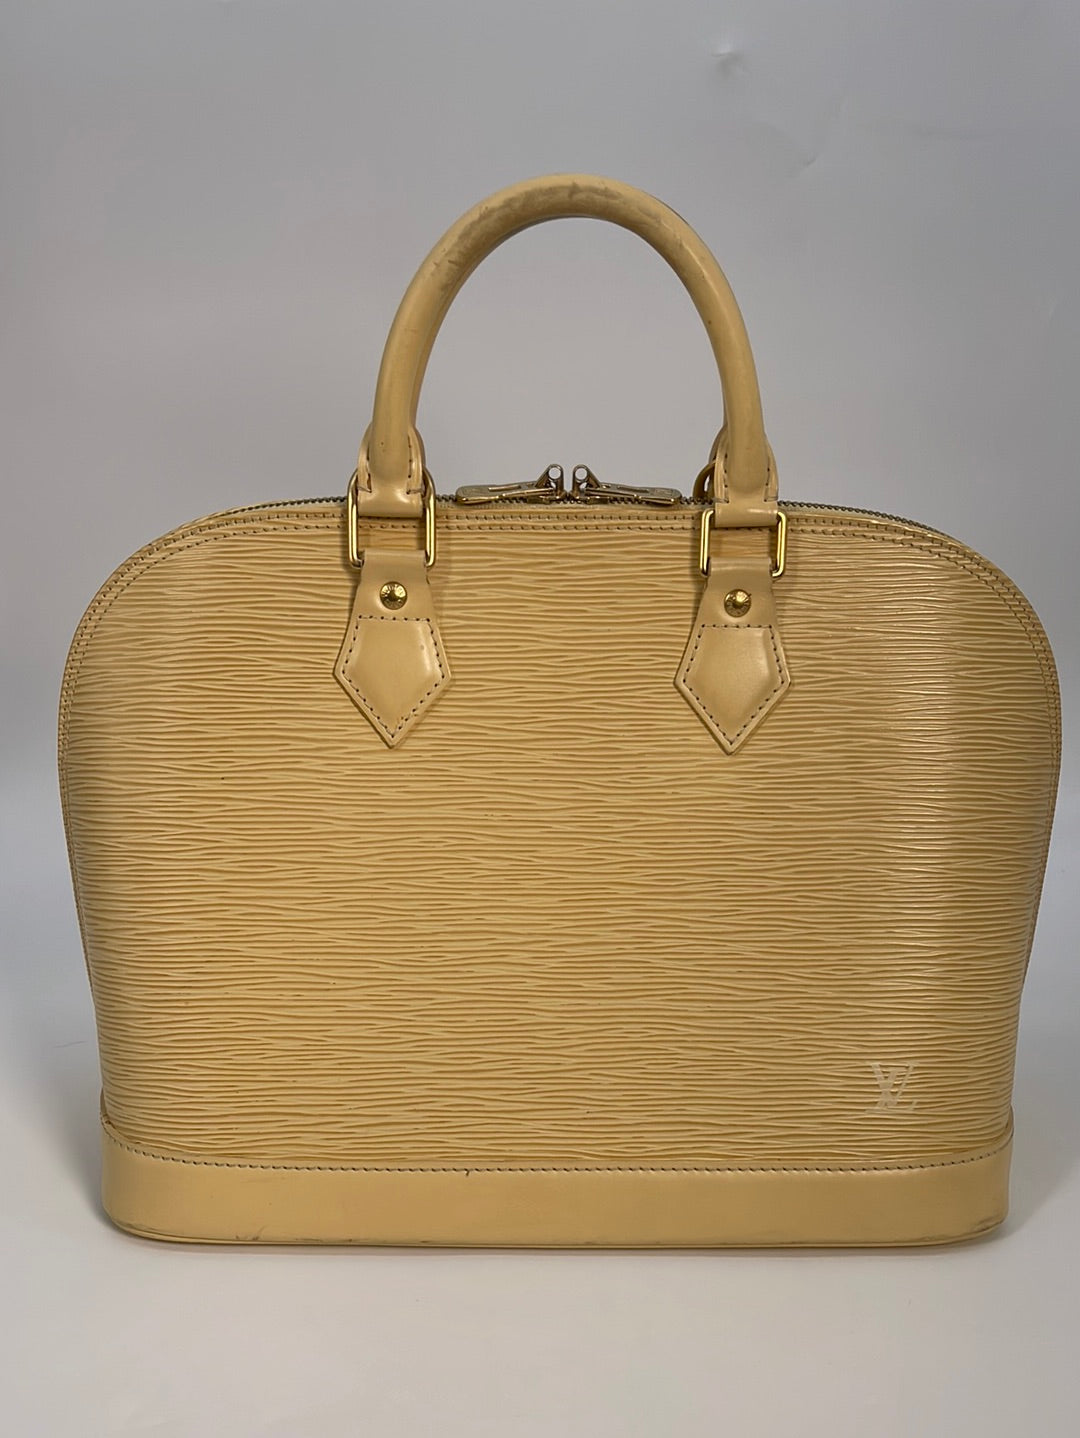 Louis Vuitton Yellow Epi Leather Alma PM Top Handle Bag